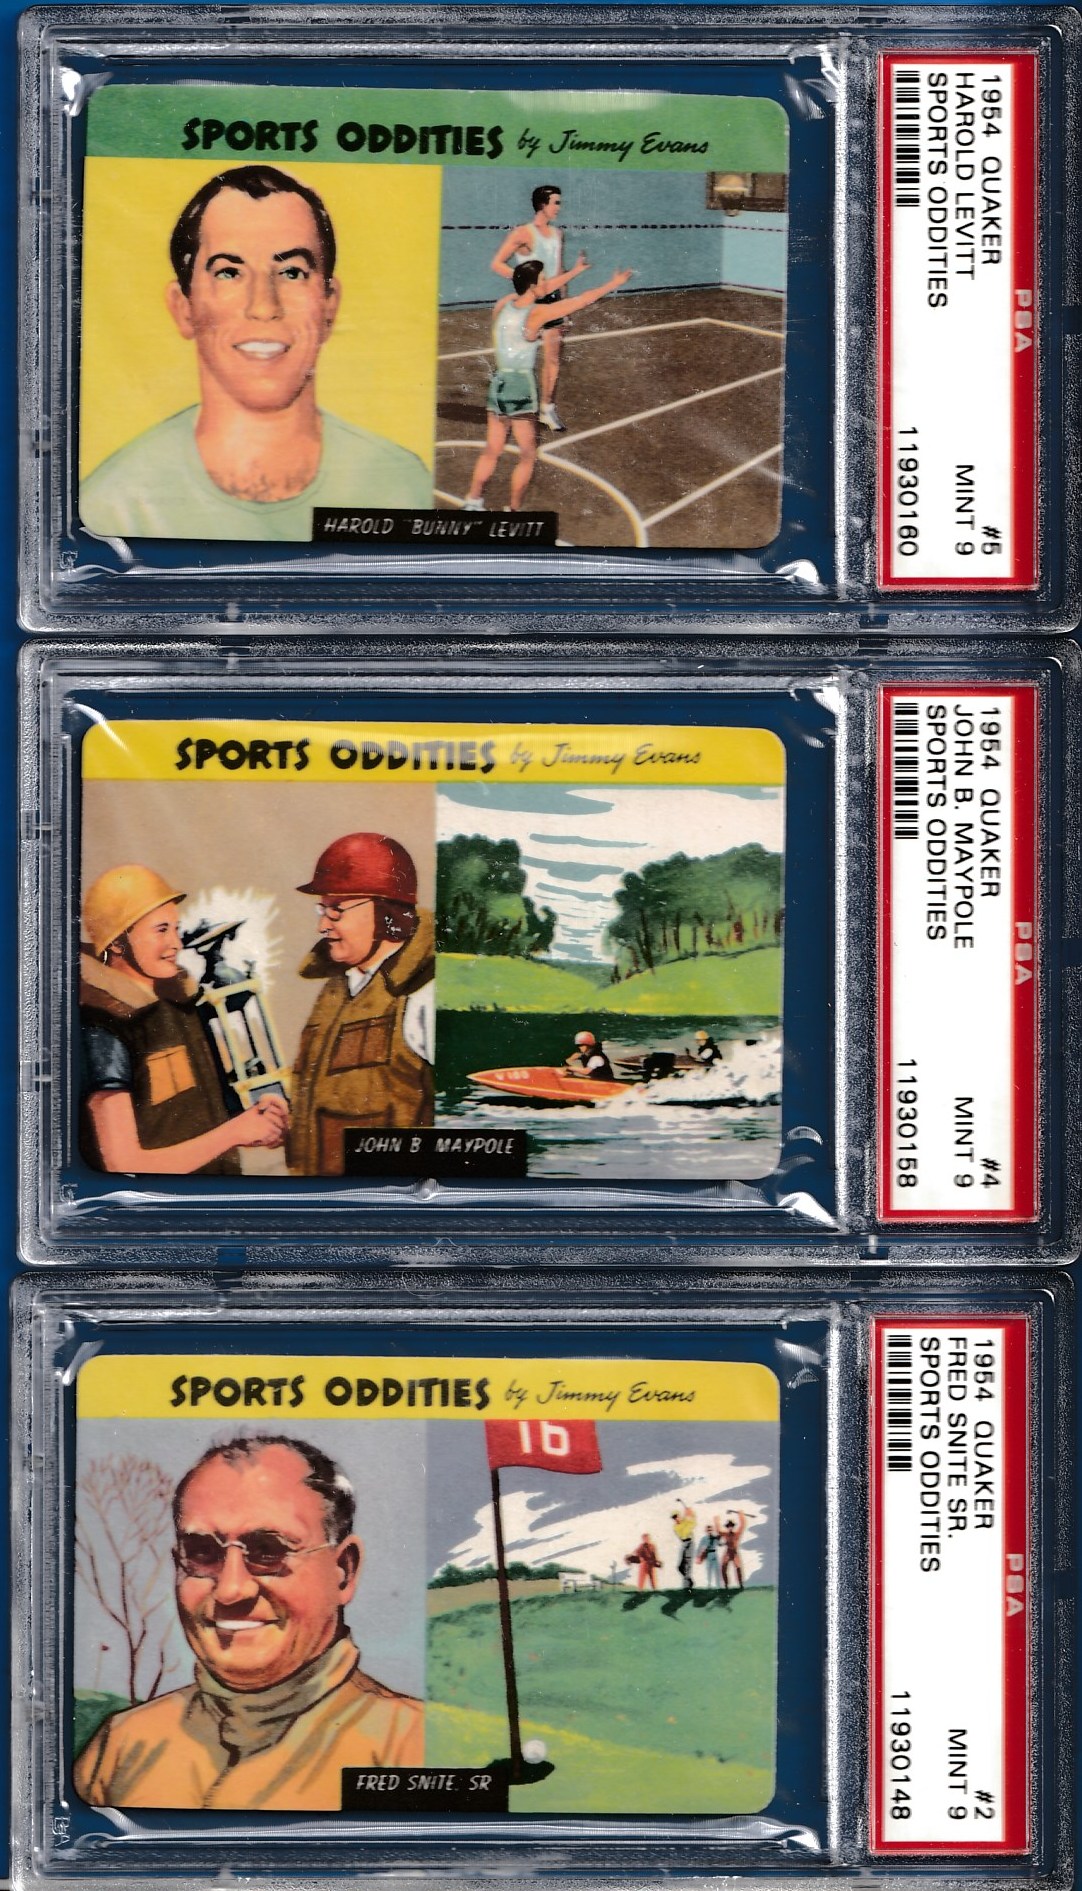 1954 Quaker Oats Sports Oddities # 2 Fred Snite Sr. (GOLF) Baseball cards value